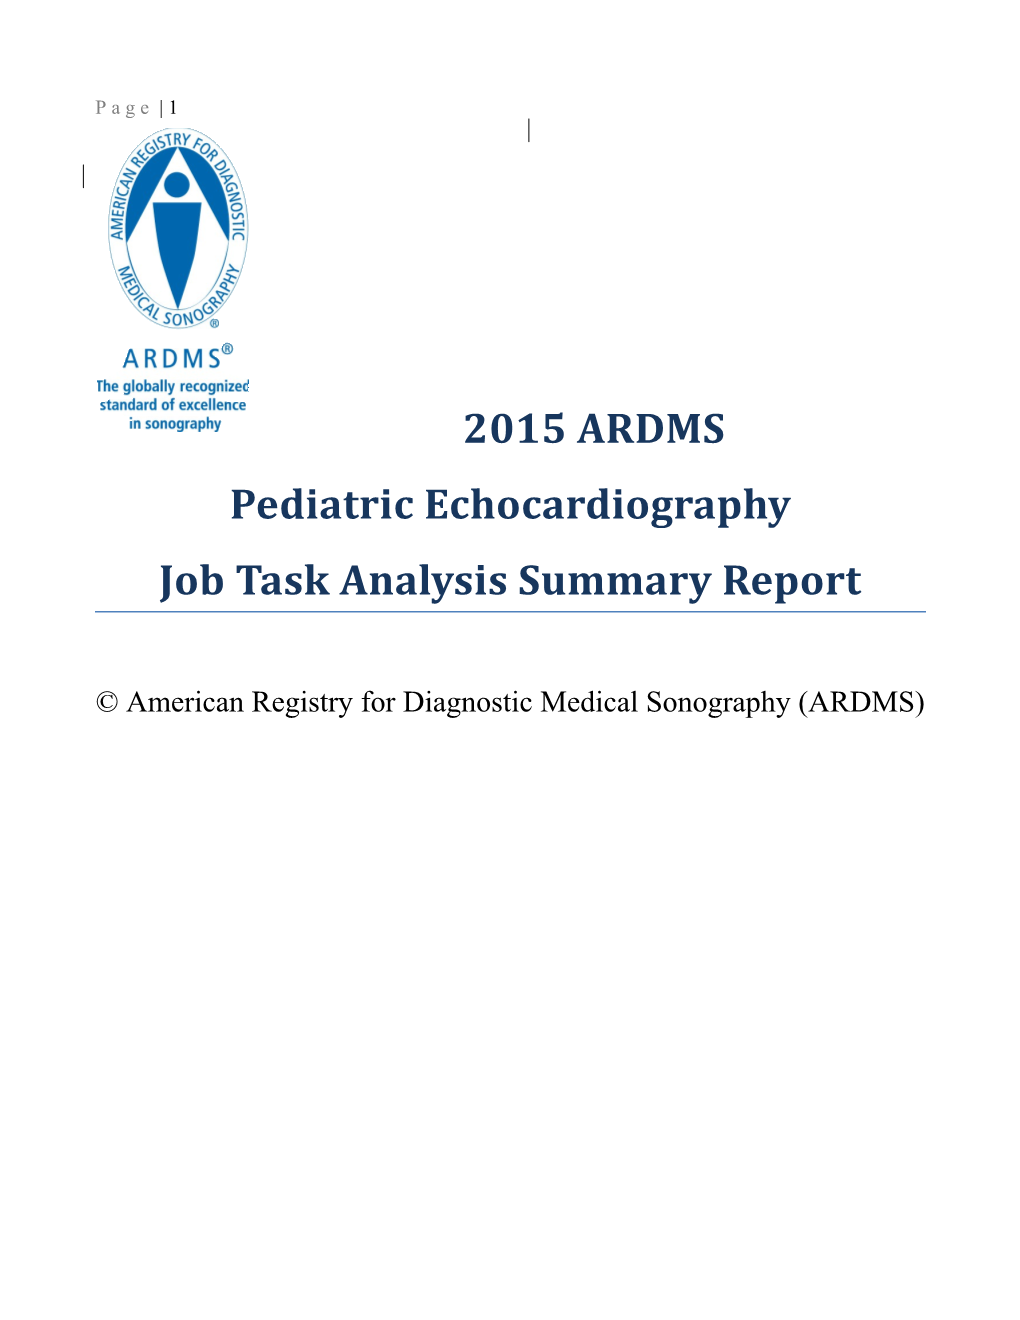 American Registry for Diagnostic Medical Sonography (ARDMS)